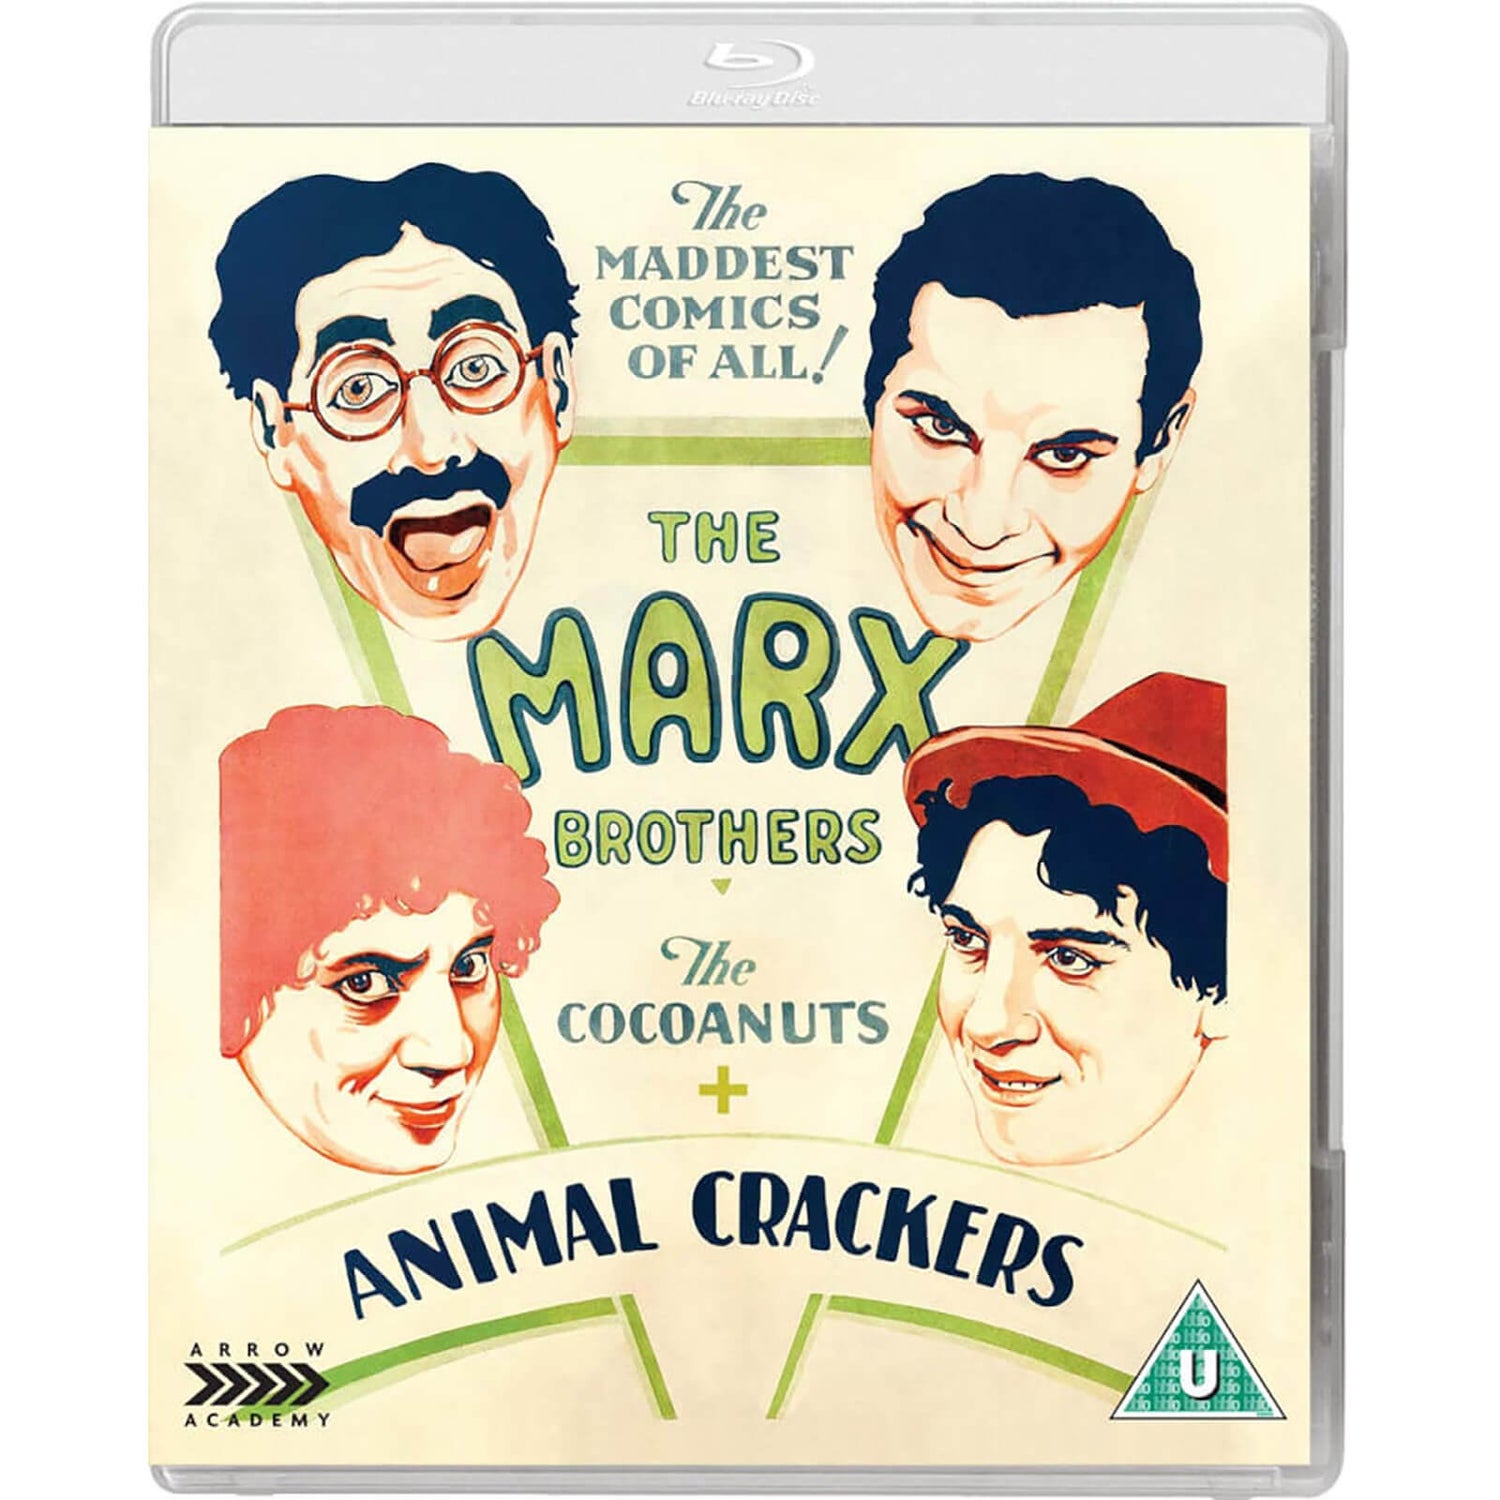 The Cocoanuts & Animal Crackers Blu-ray